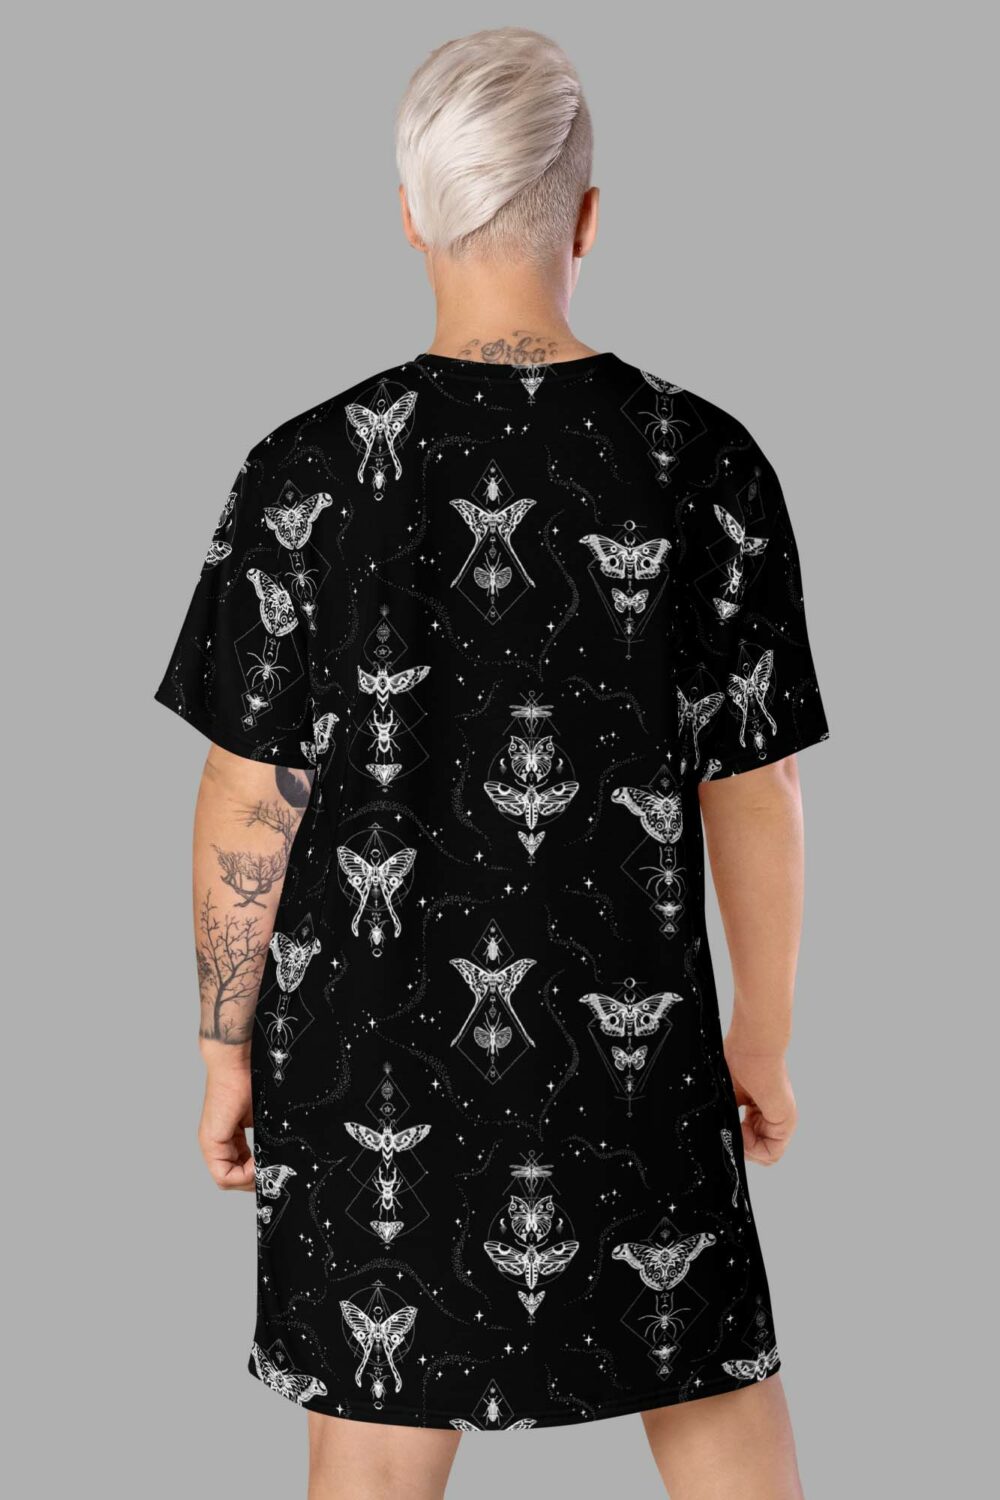 cosmic drifters entomon print t shirt dress back2